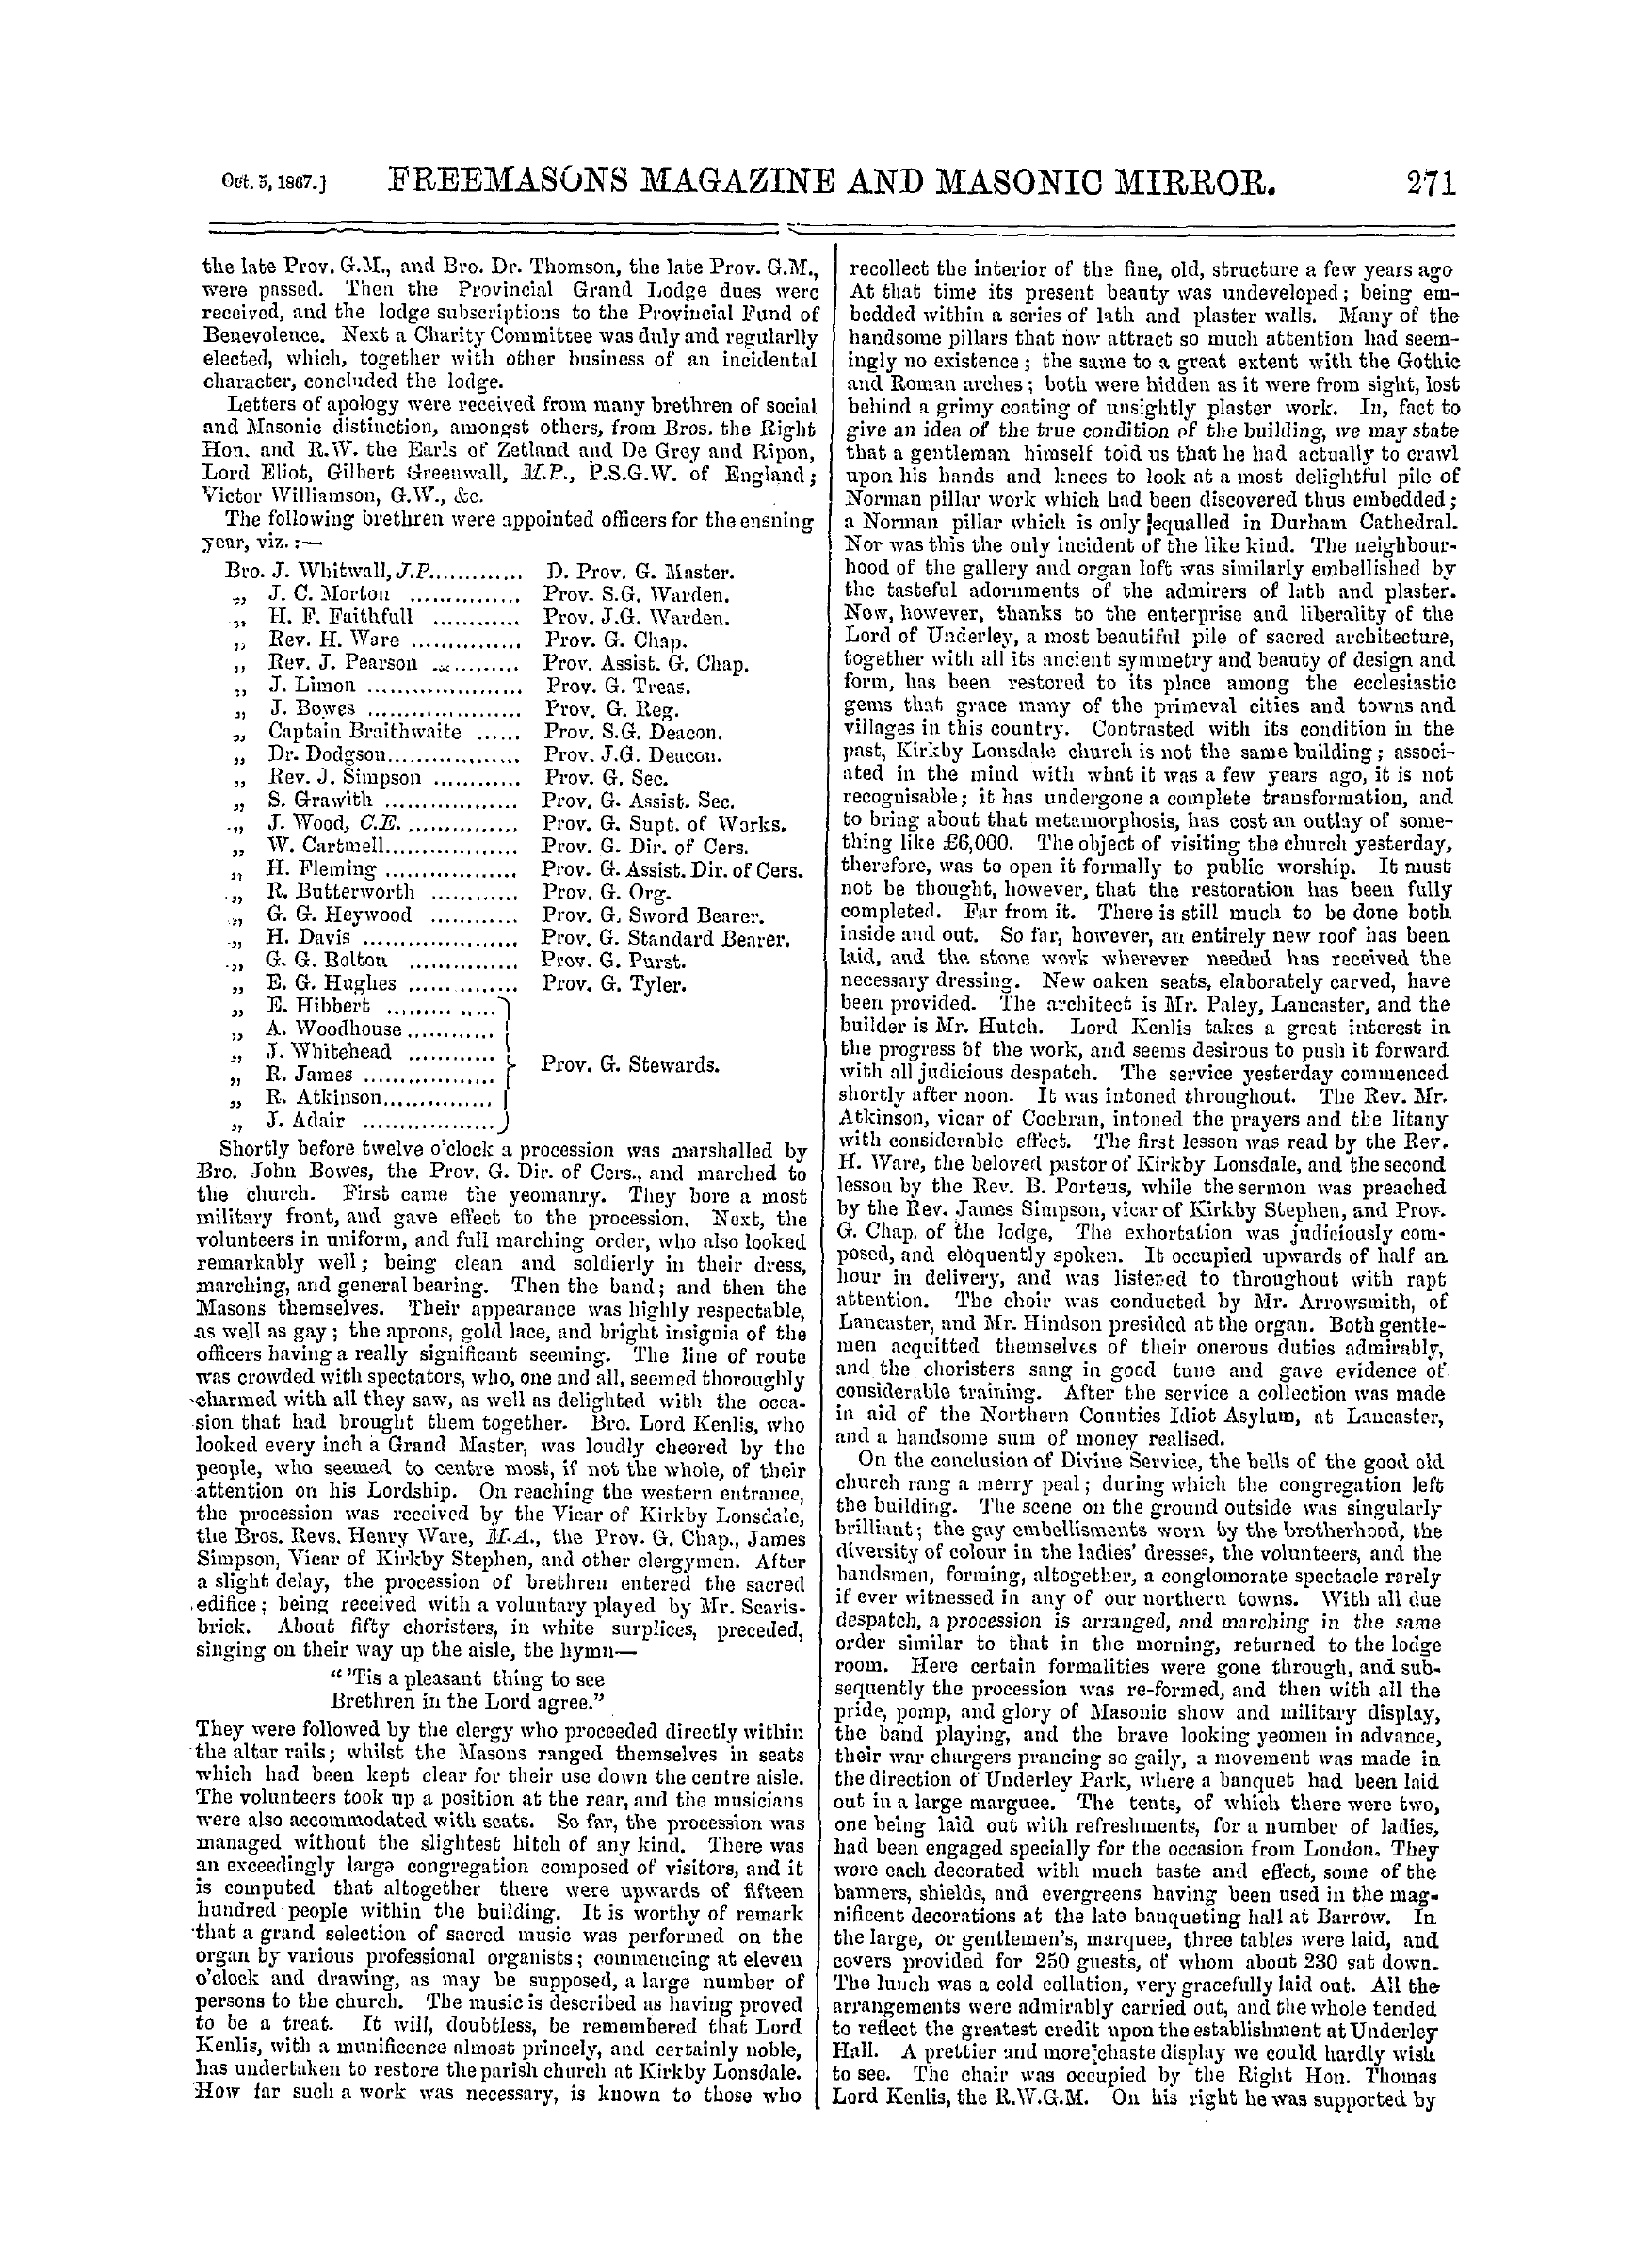 The Freemasons' Monthly Magazine: 1867-10-05 - Provincial.